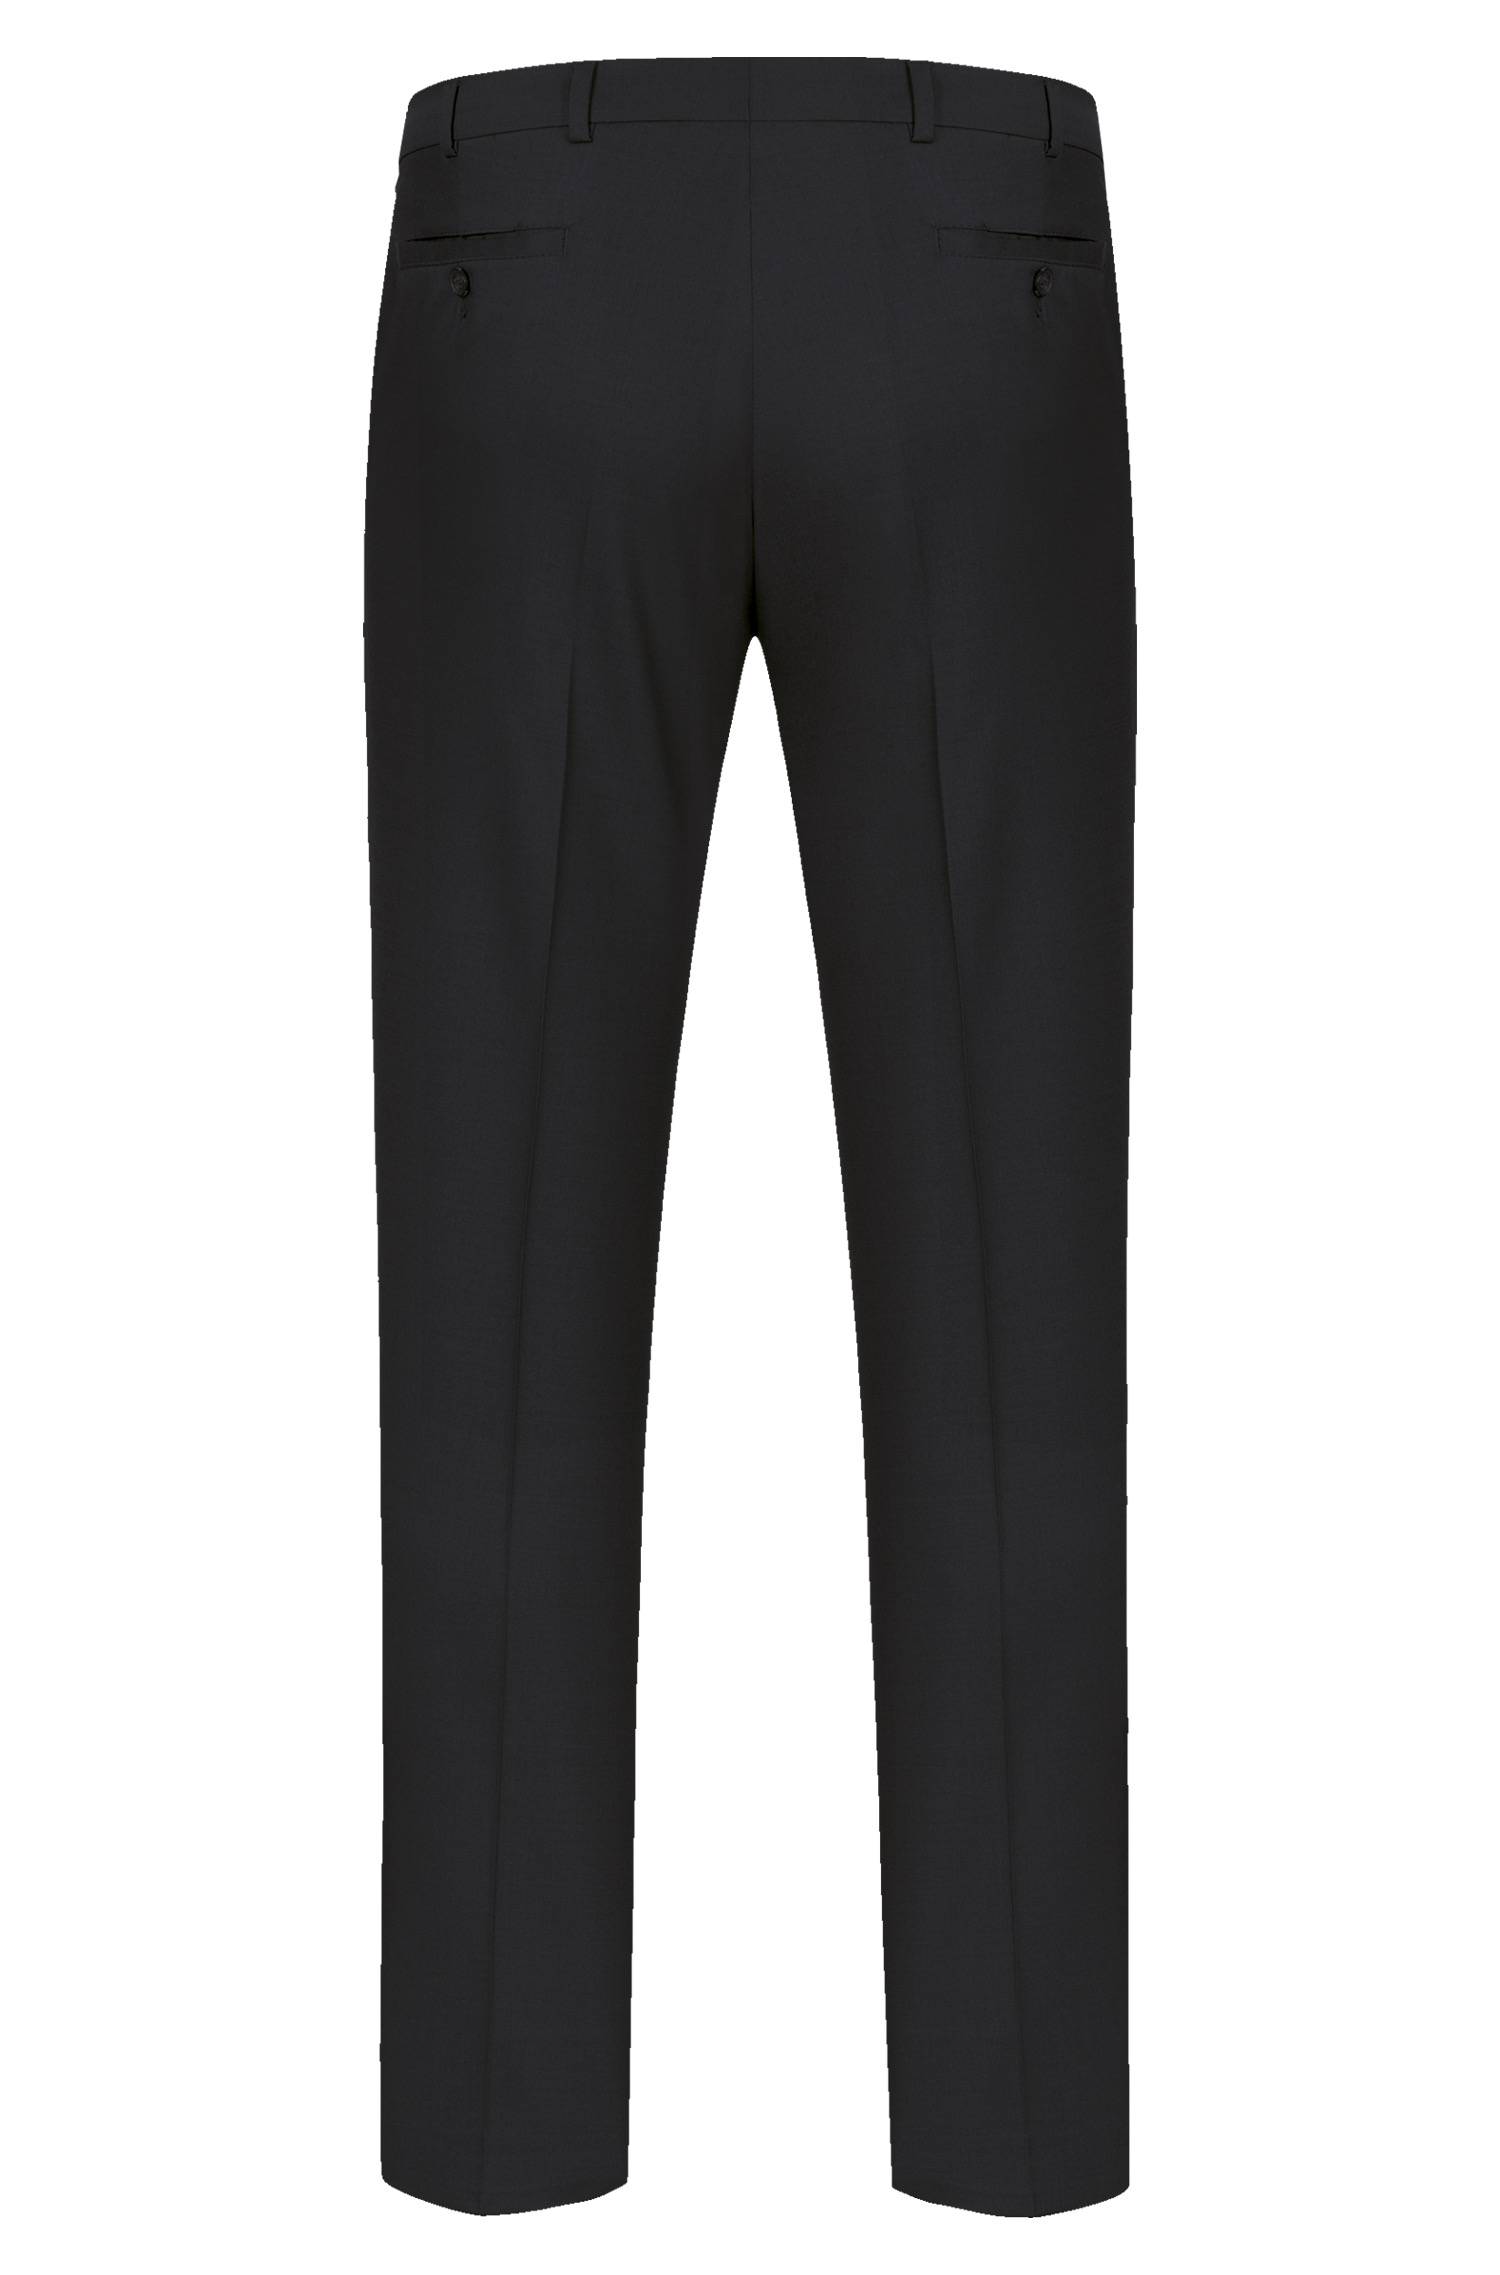 Men's trousers MODERN 37.5 regular fit